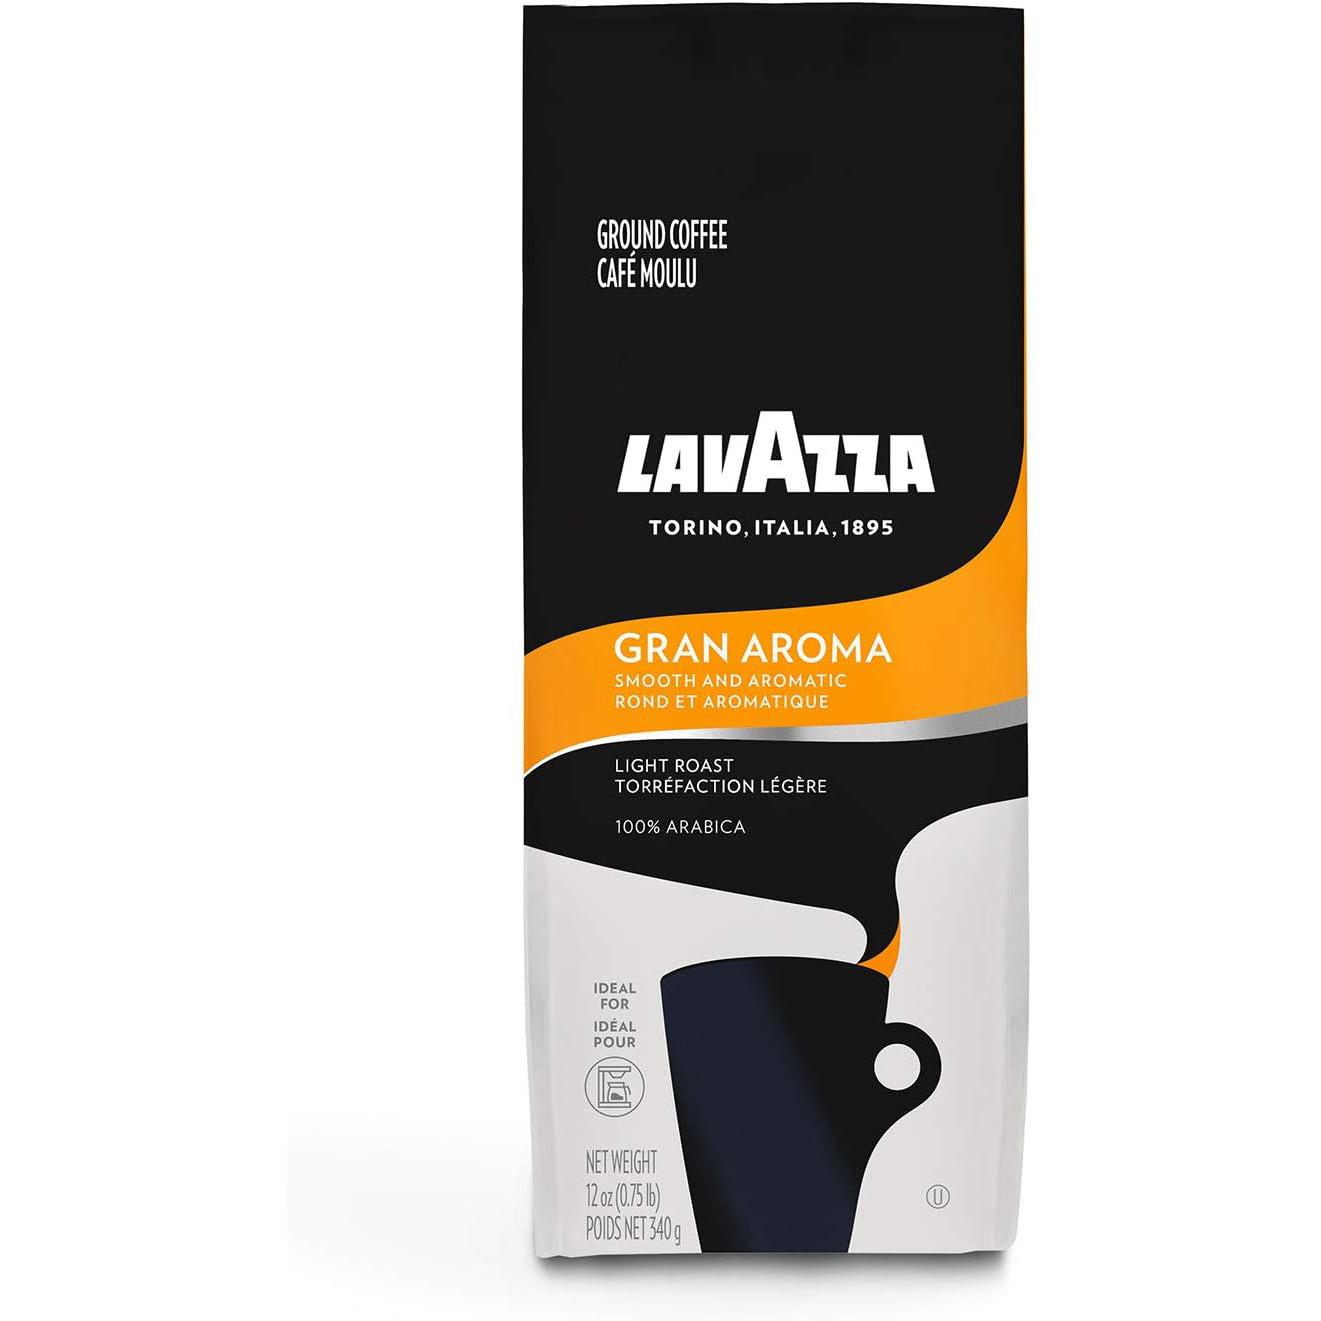 Lavazza Light Roast Ground Coffee Blend Gran Aroma for $4.50